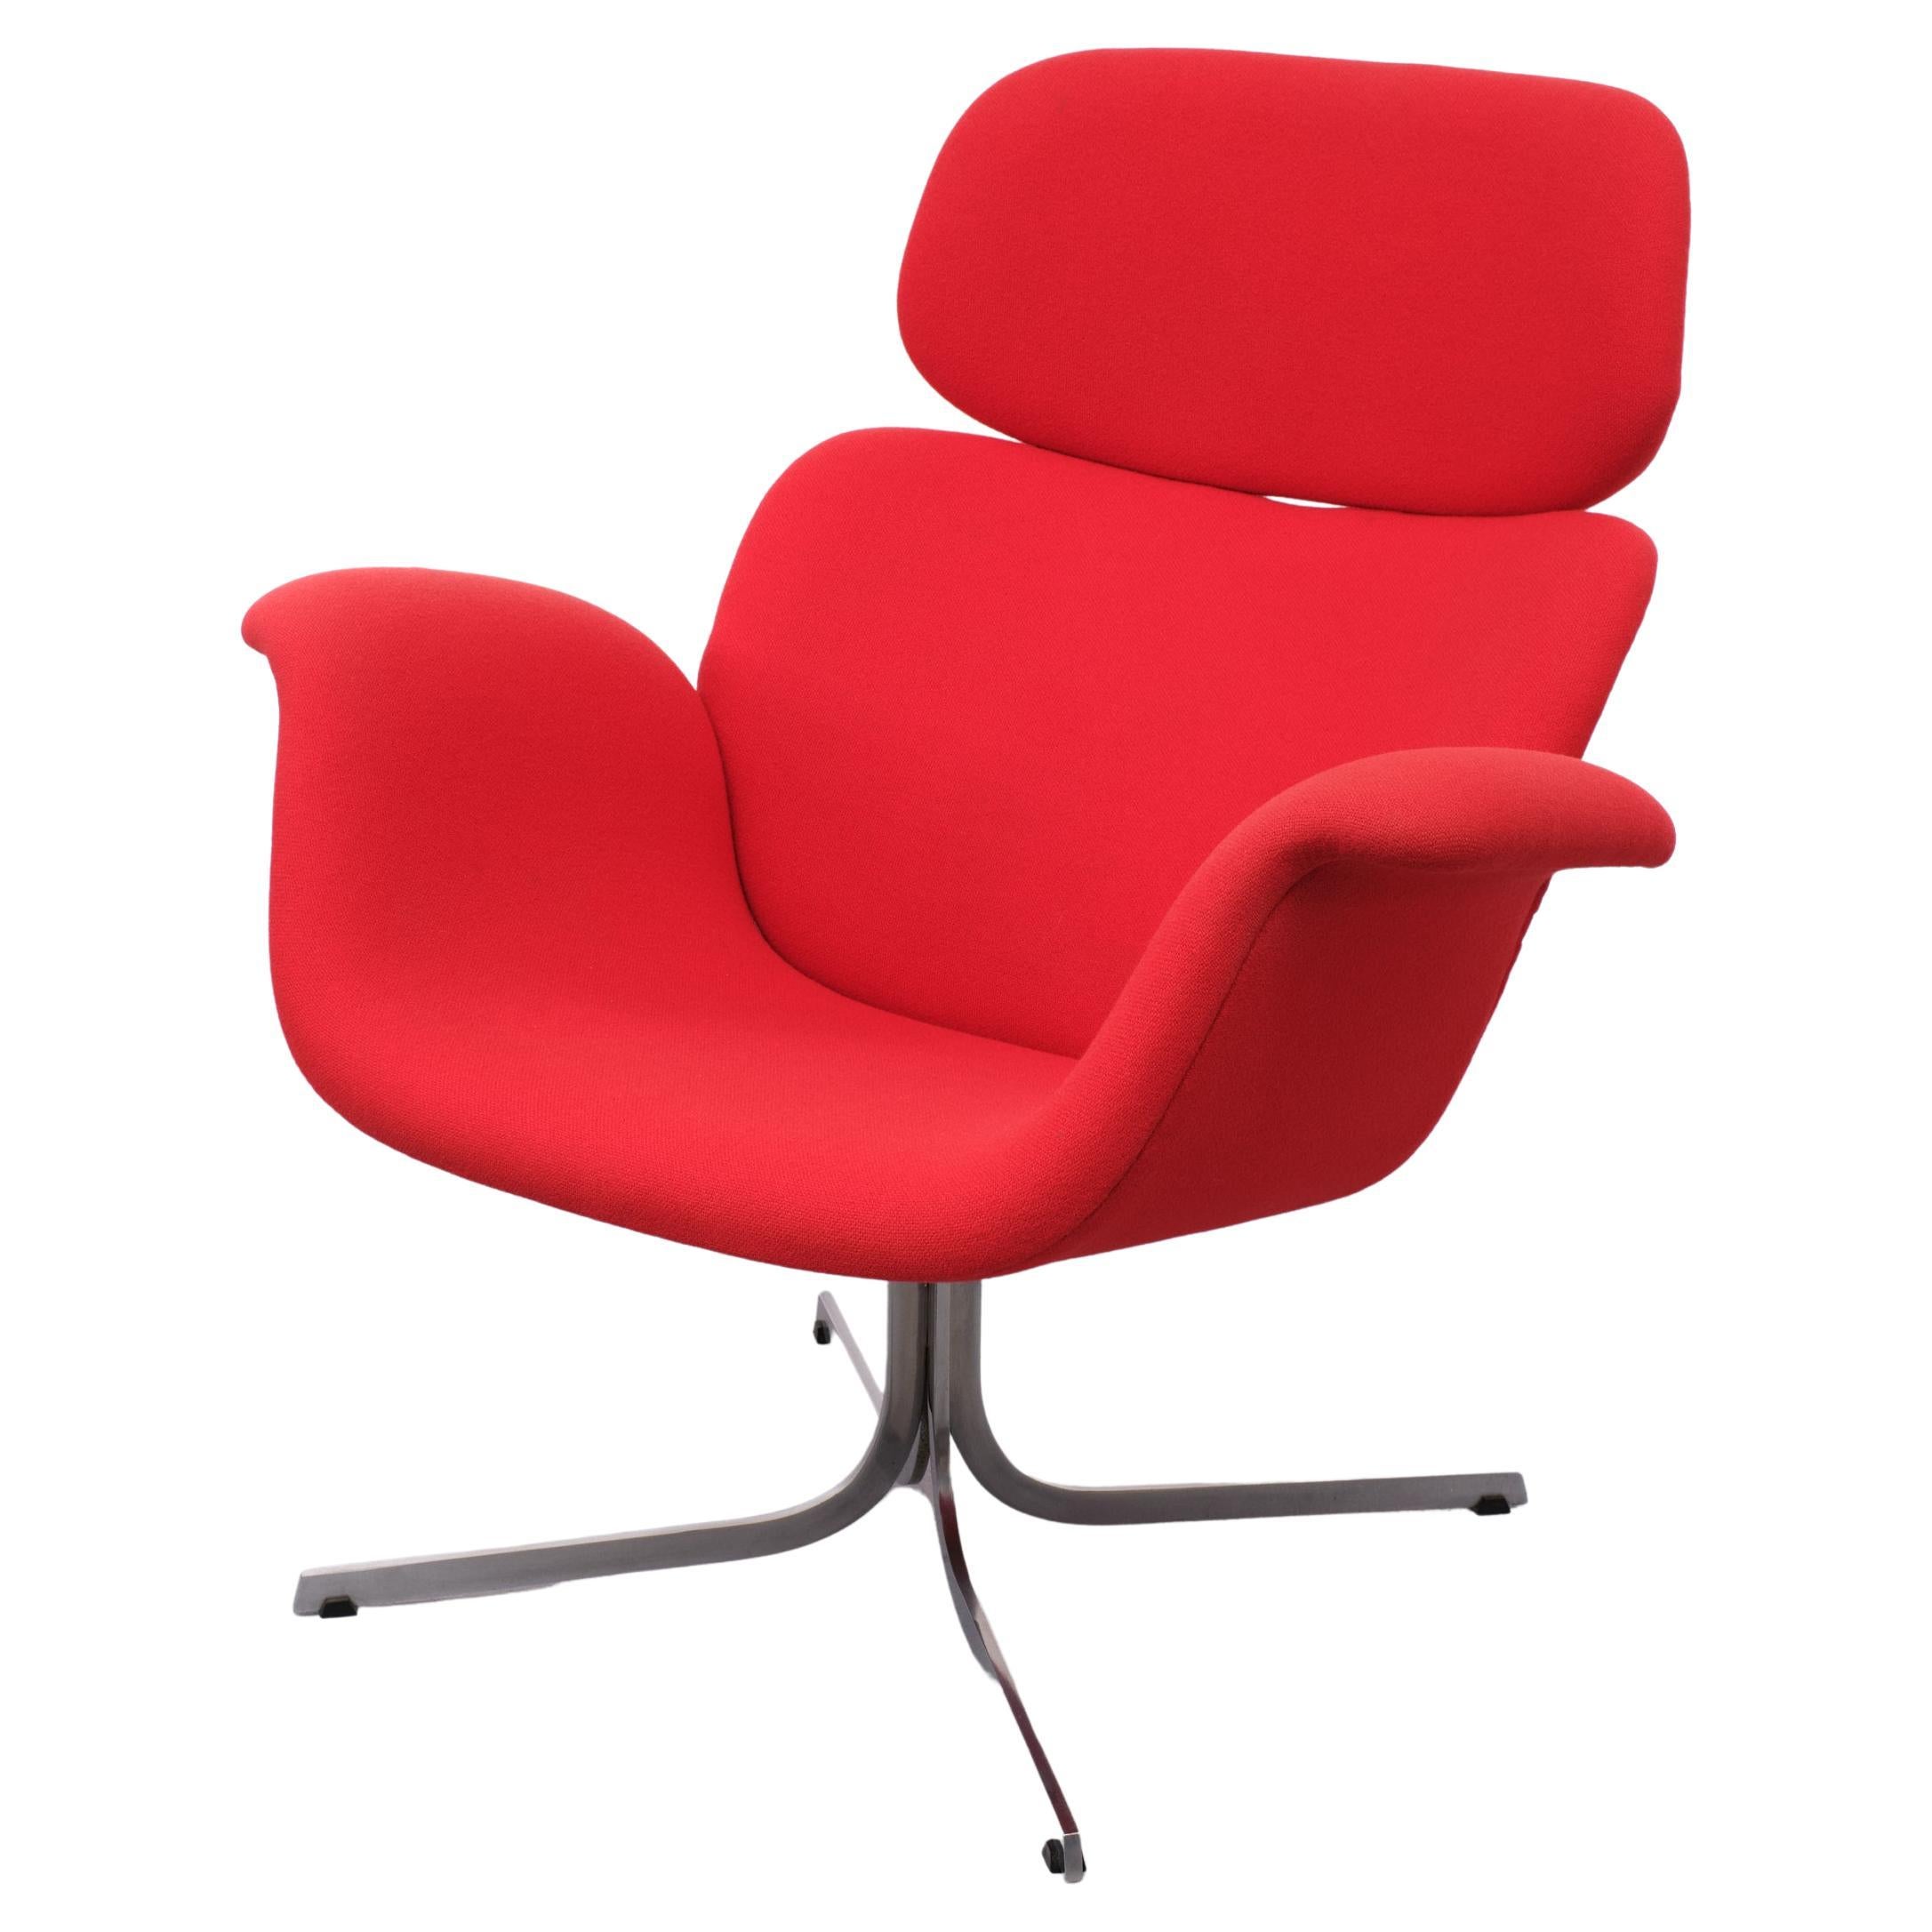 Pierre Paulin  Lounge chair '' Big Tulip ''  Artifort   1960s  